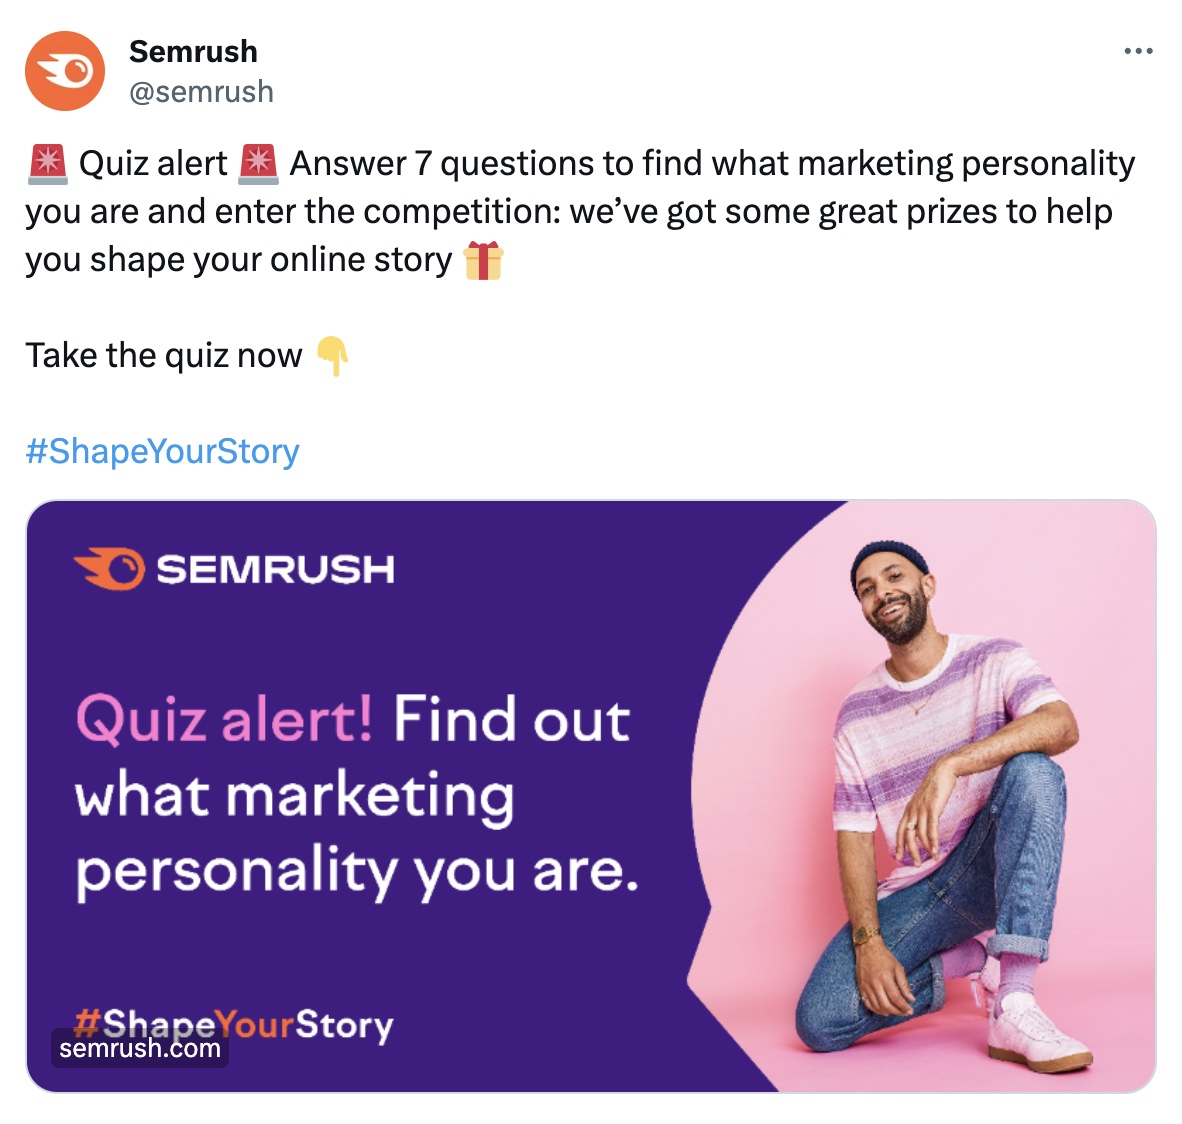 Semrush post on X platform, inviting users to take a quiz